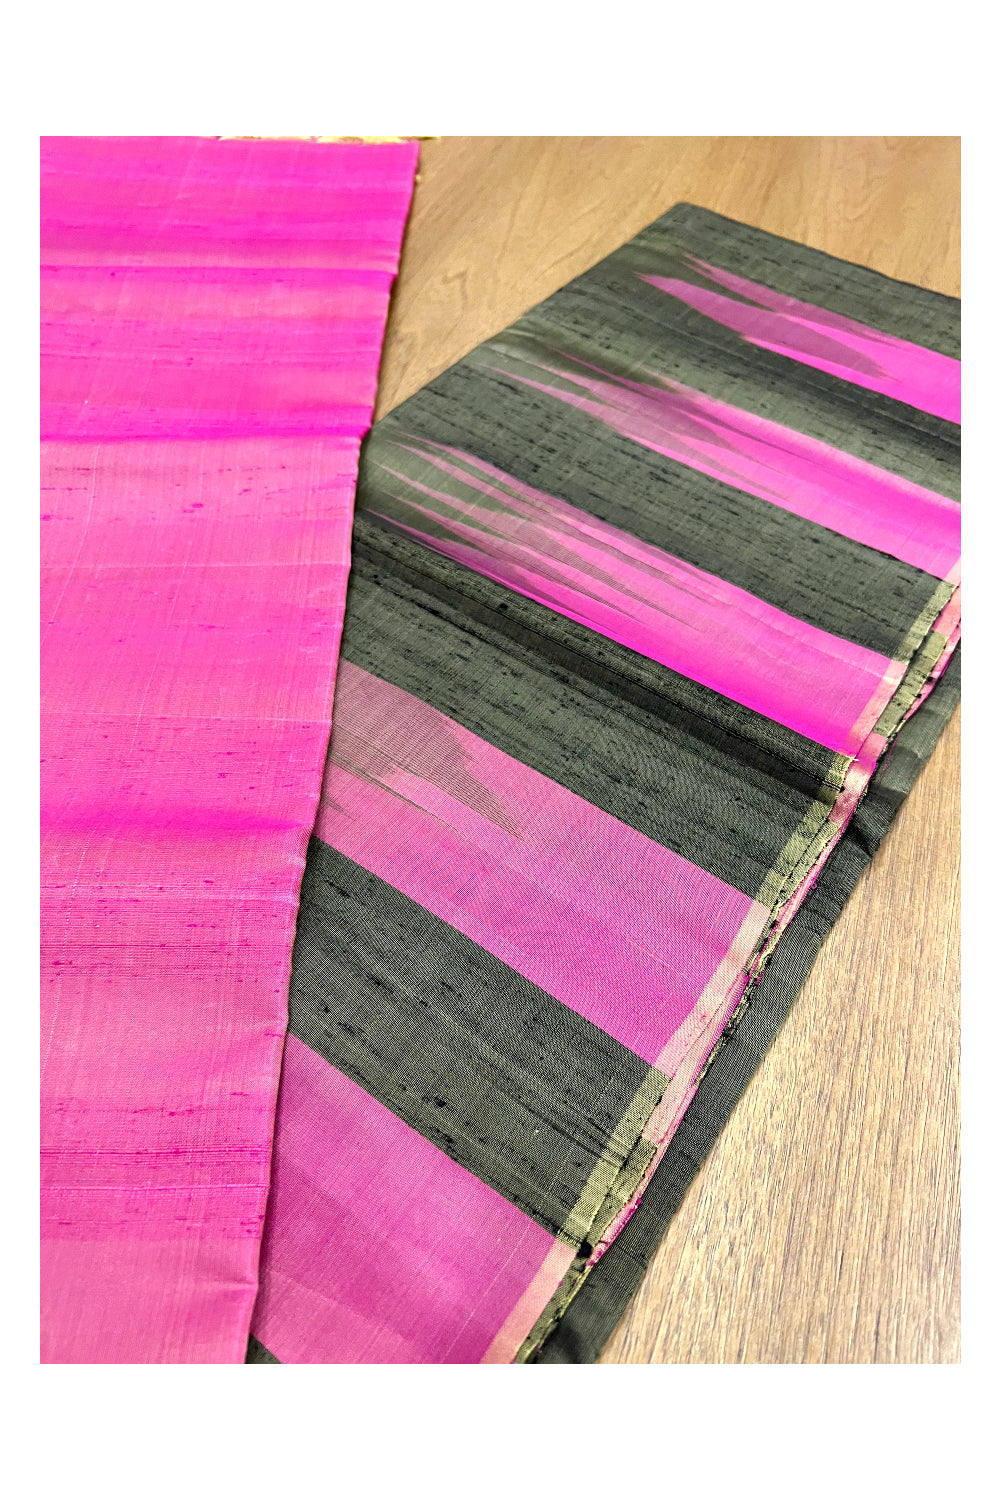 Southloom Handloom Pure Silk Kanchipuram Saree with Dark Green Body and Rose Blouse Piece